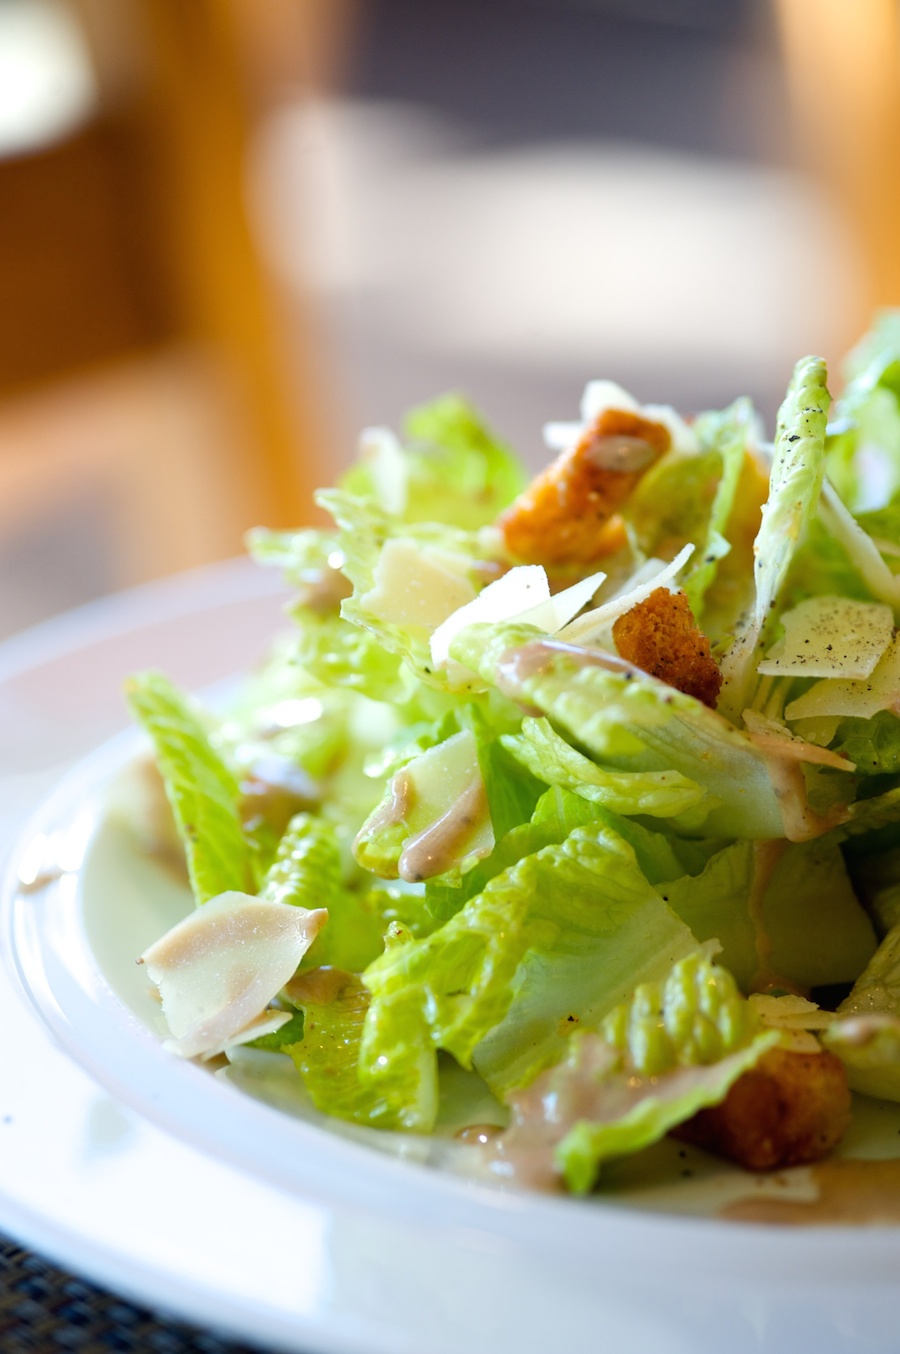 BOA Steakhouse Caesar Salad